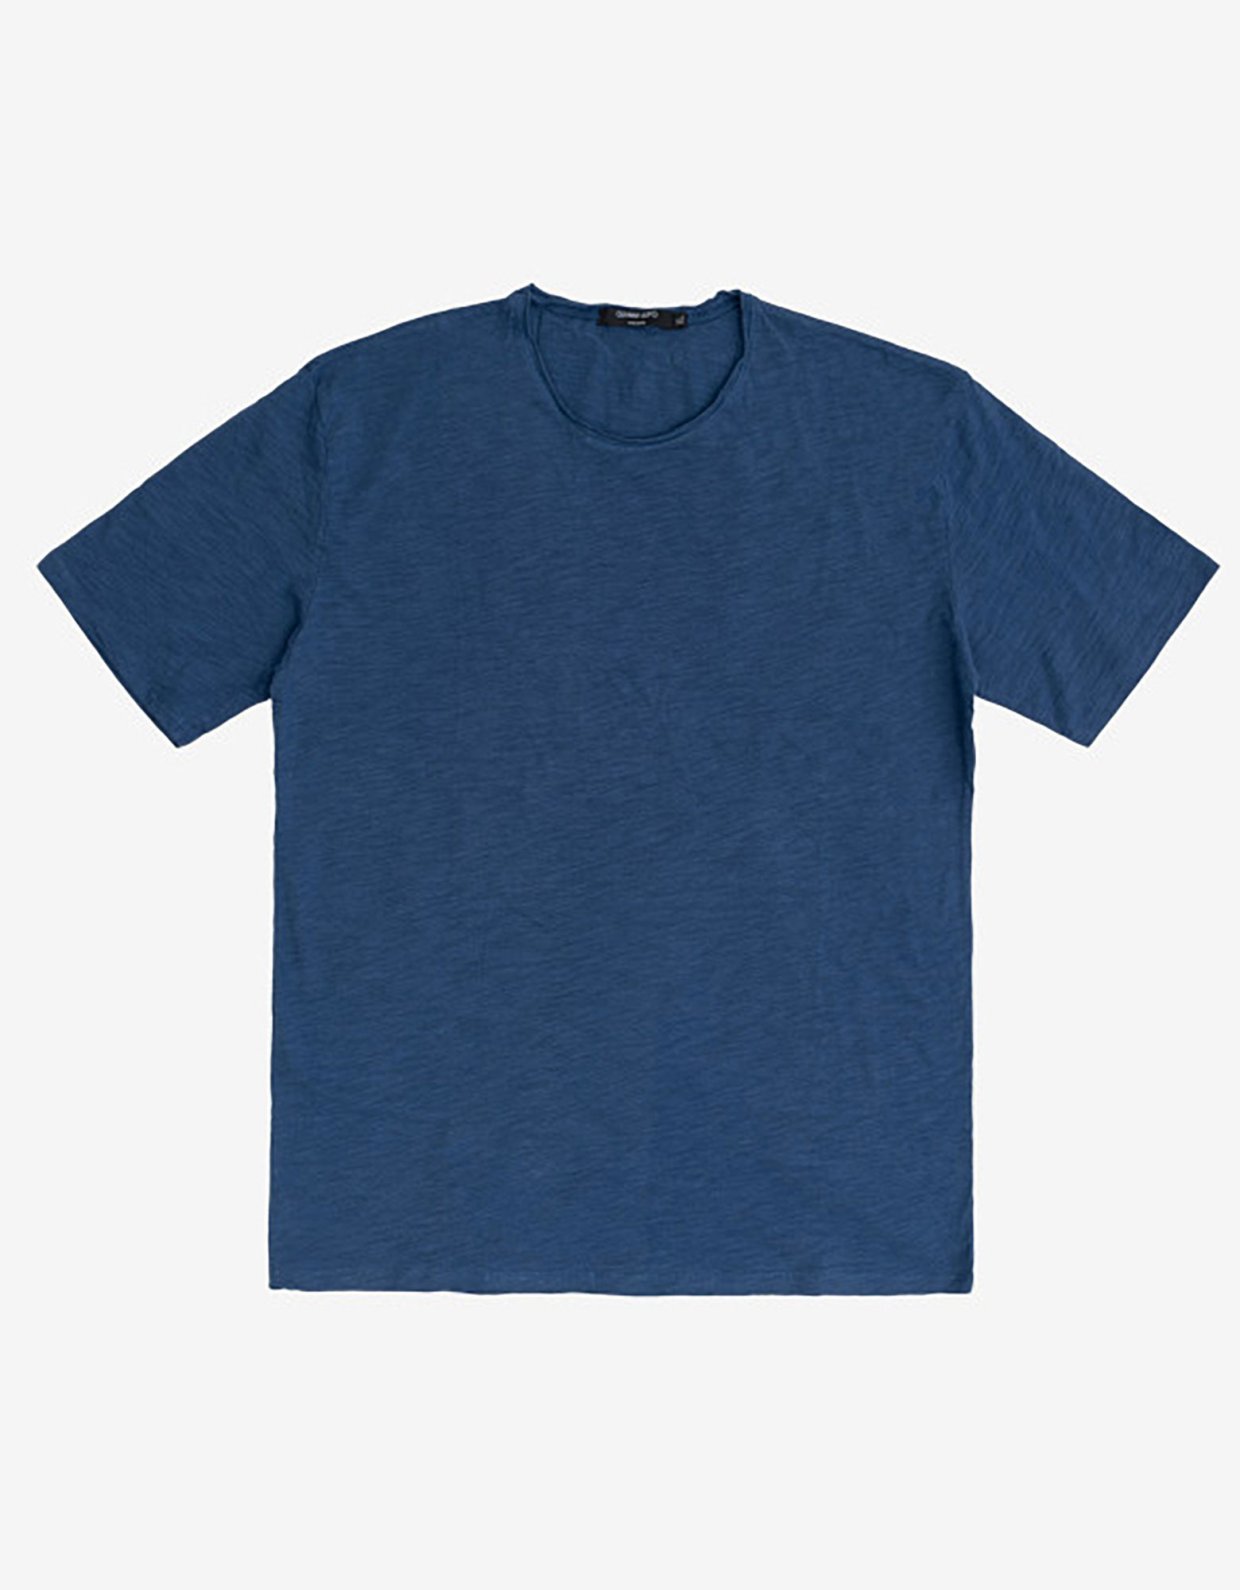 Gianni Lupo T-shirt blue